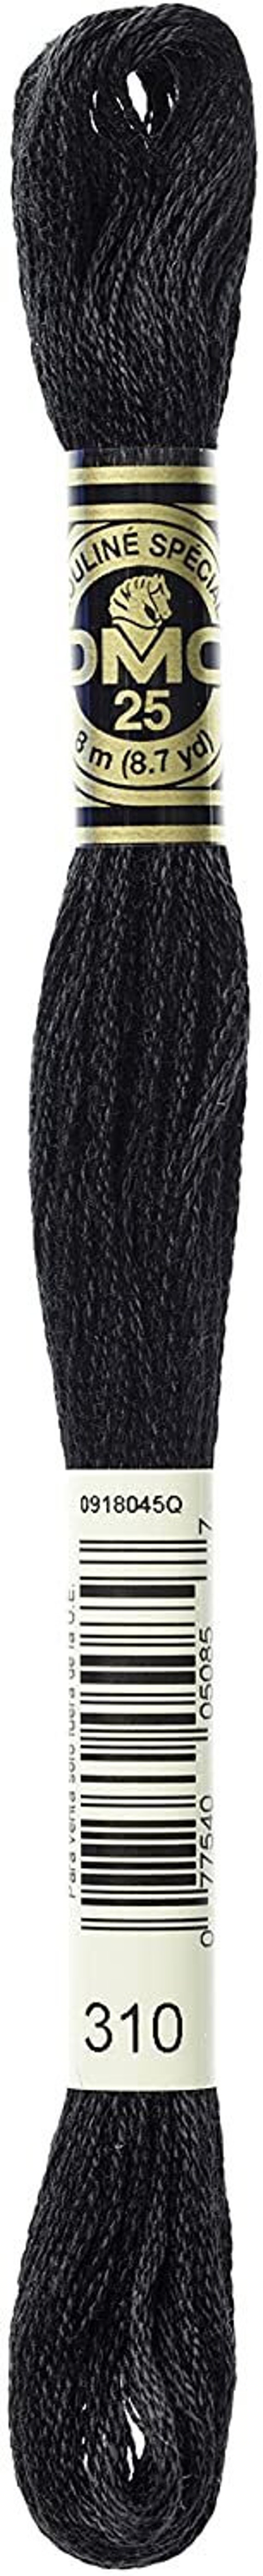 DMC 6-Strand Embroidery Cotton Floss Black 117-310